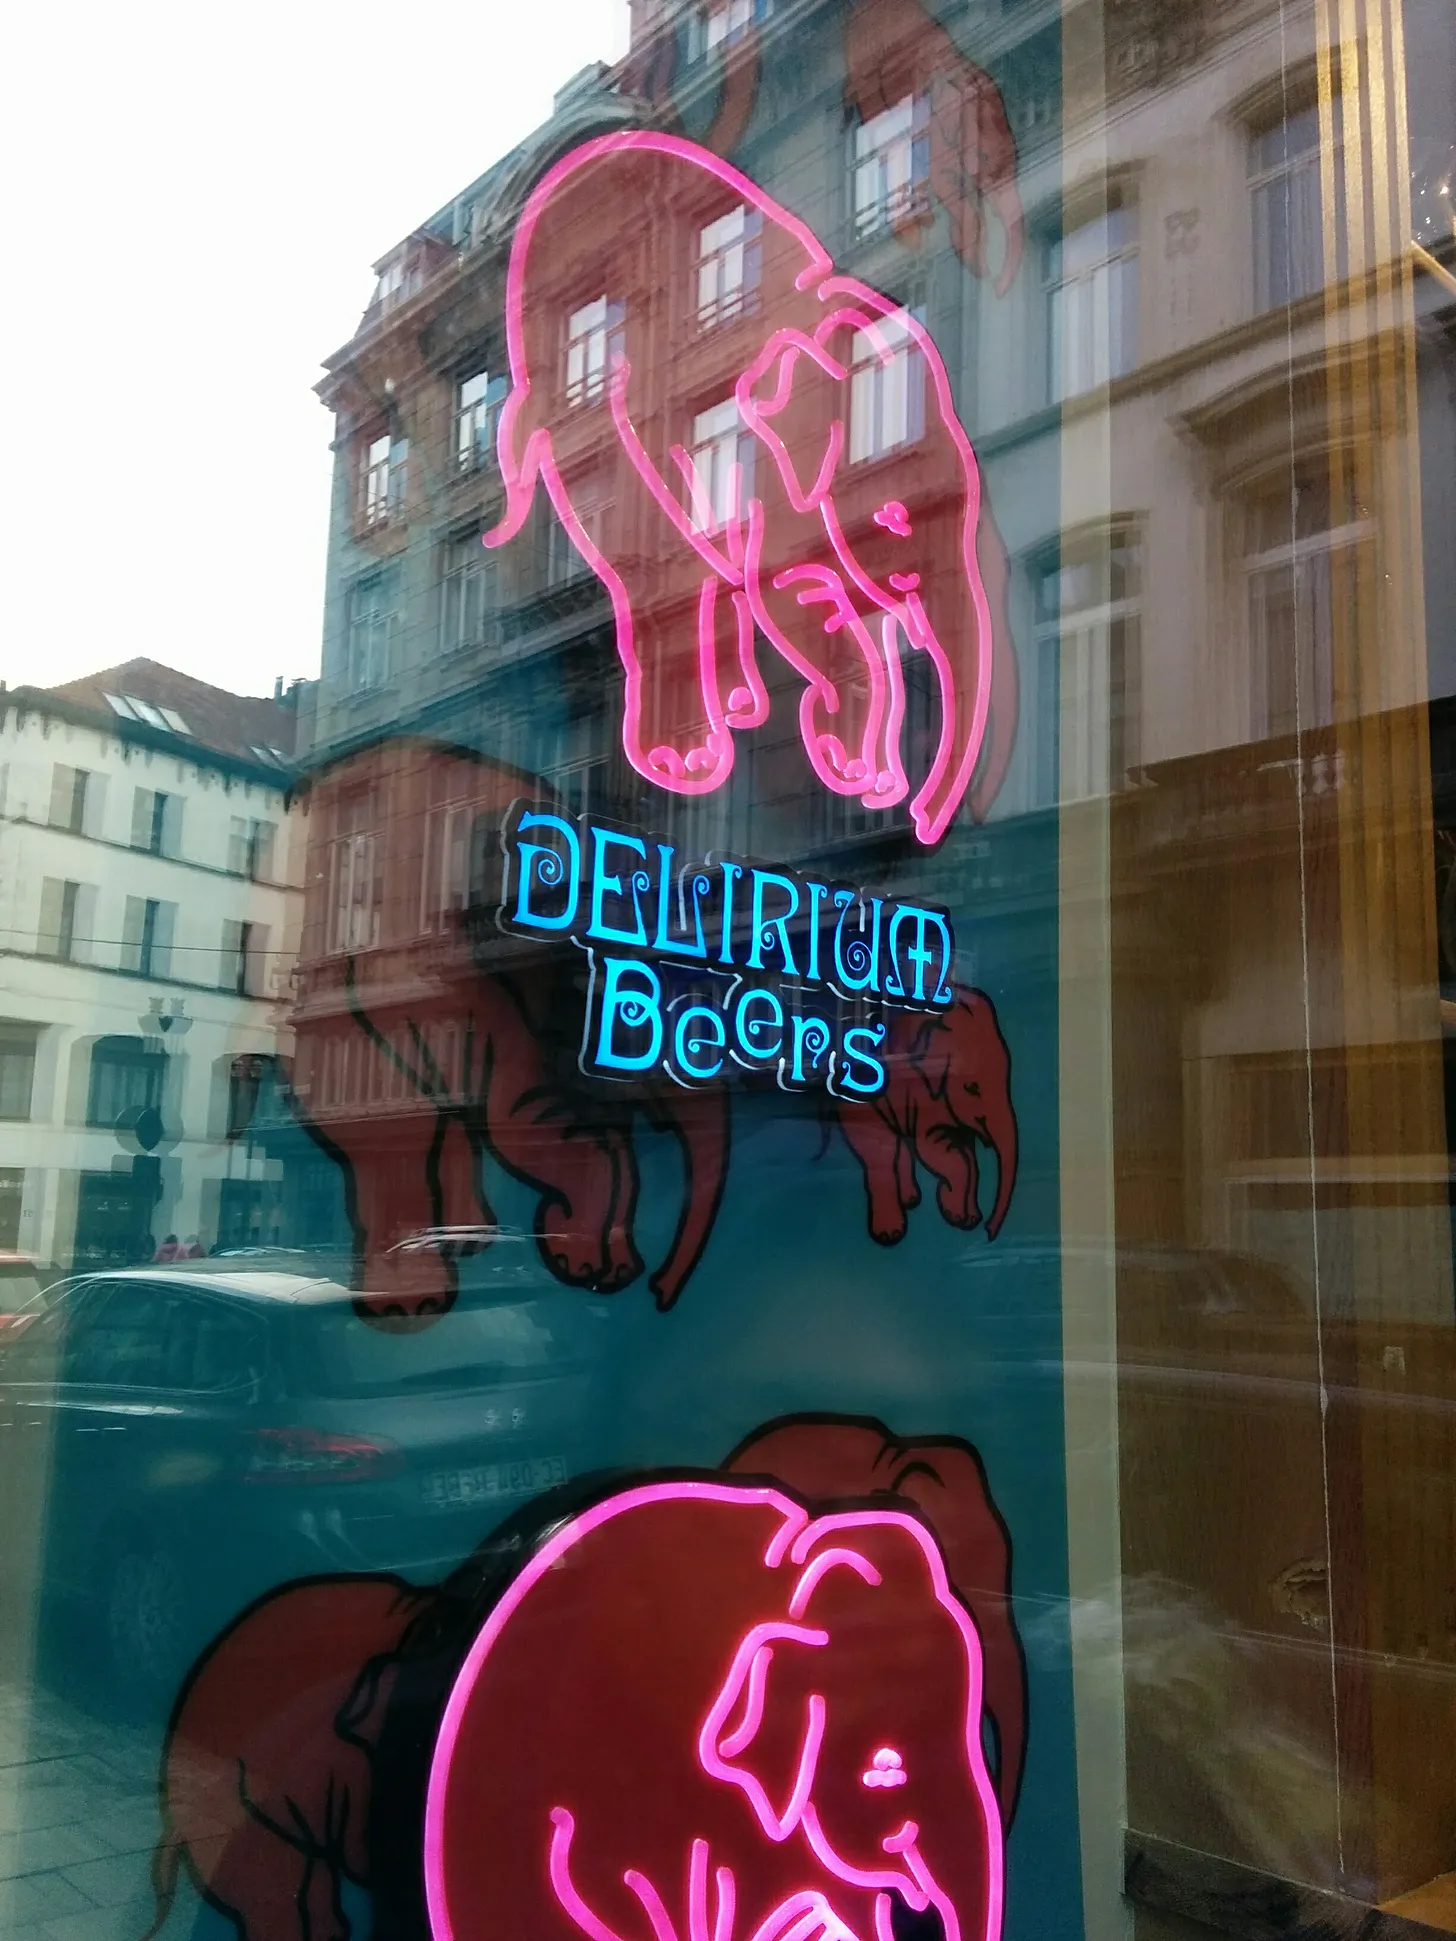 Delirium bar in Bruxelles, Belgium, with its distinctive pink elephant logo